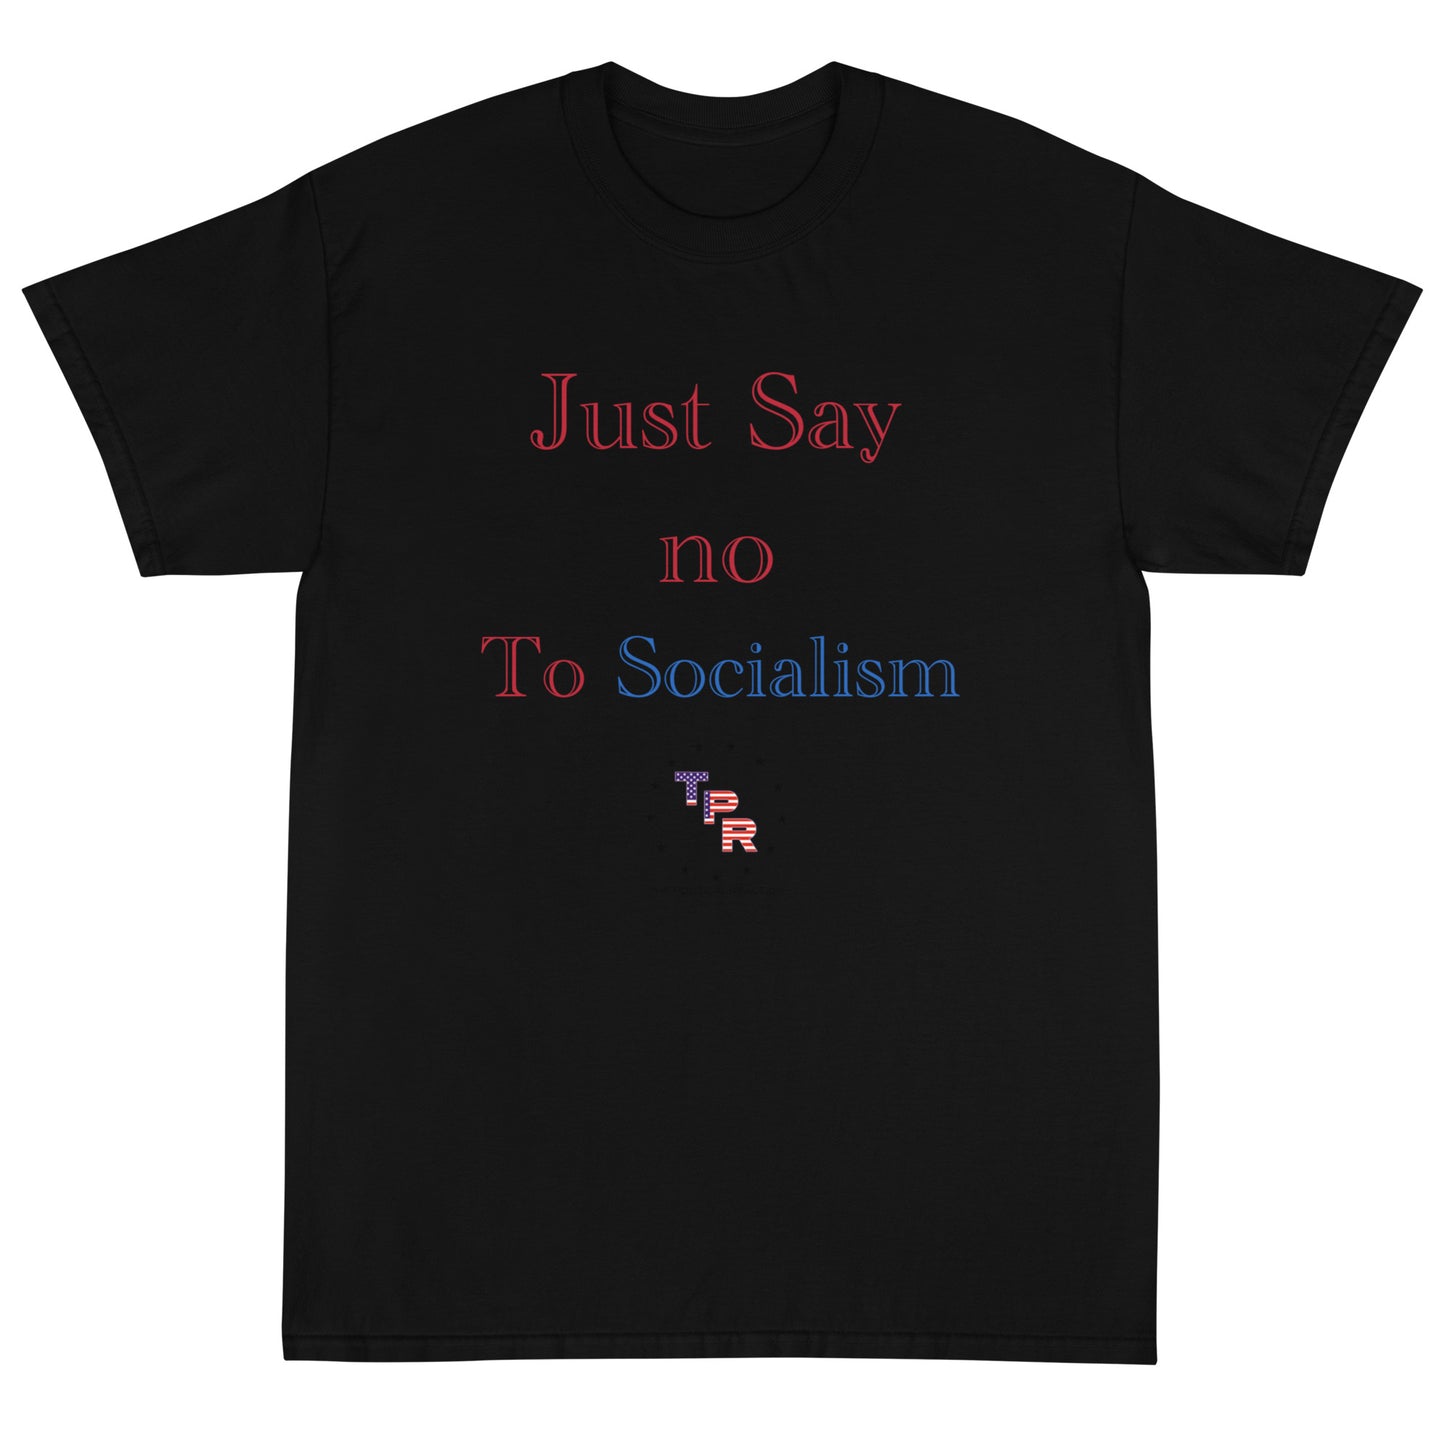 Just-say-no-to-socialism-t-shirt-Black